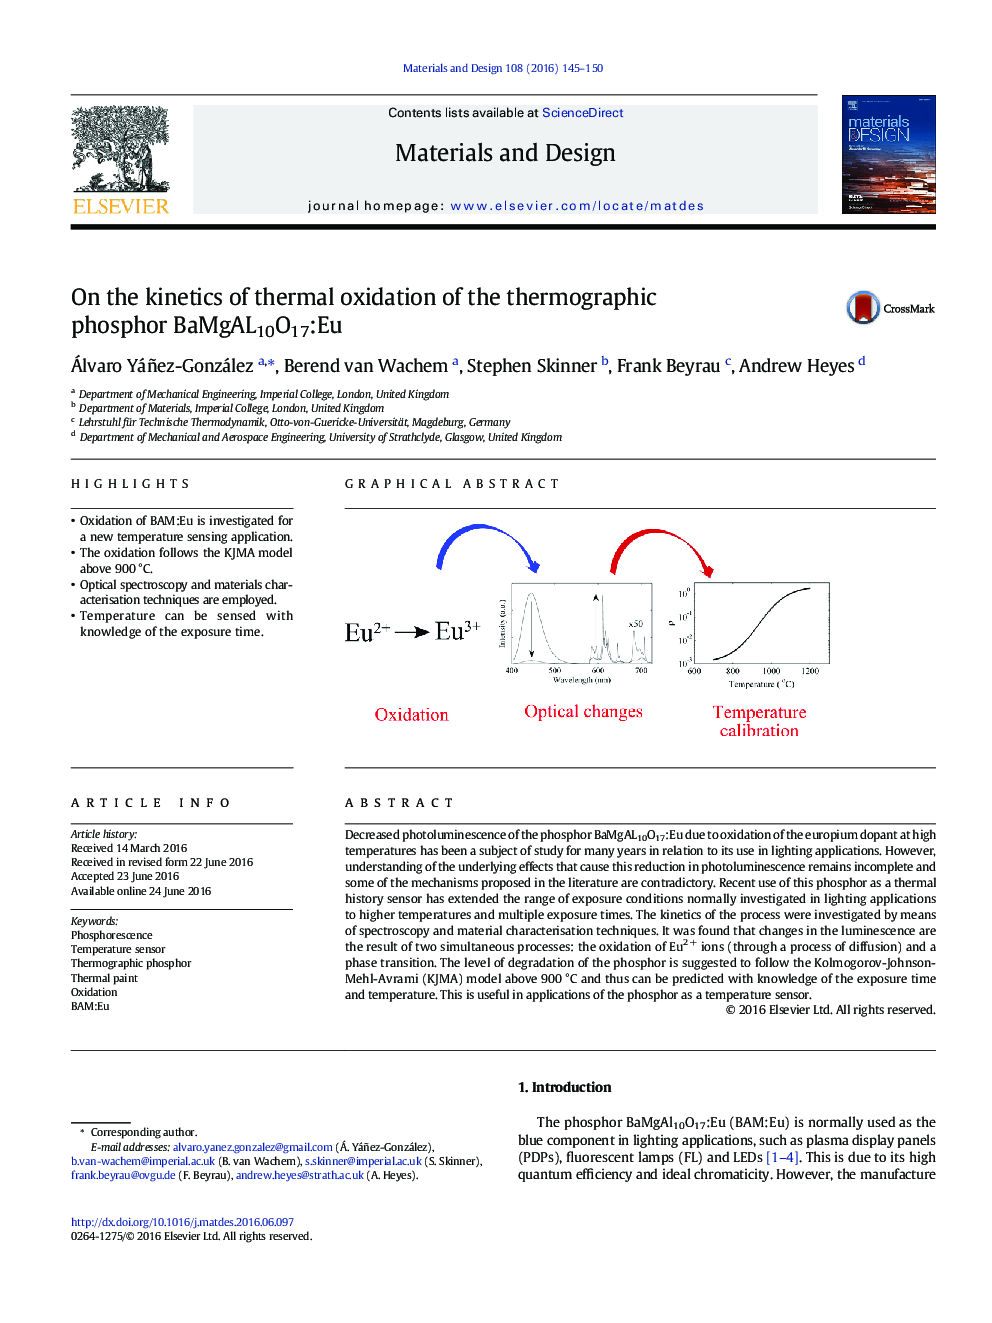 On the kinetics of thermal oxidation of the thermographic phosphor BaMgAL10O17:Eu